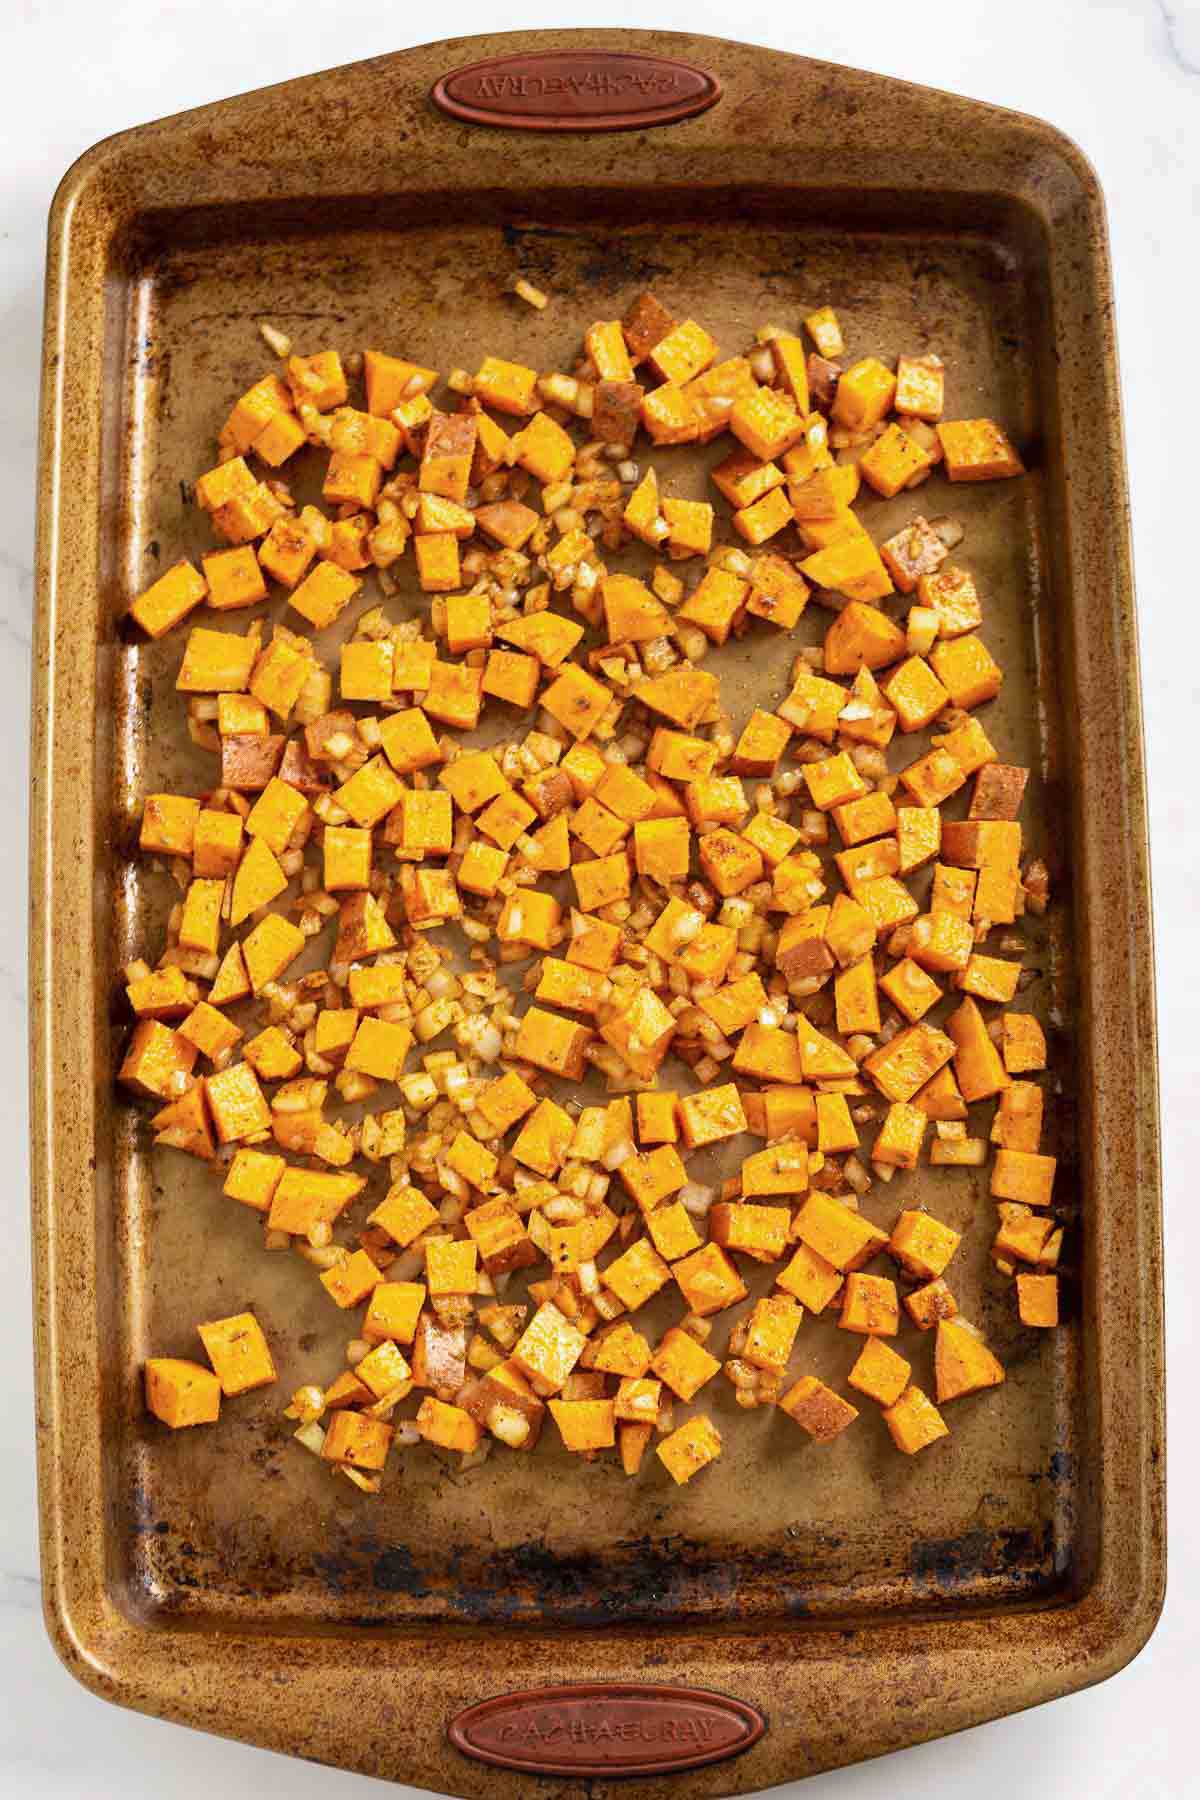 Seasoned cubed sweet potato on a baking tray